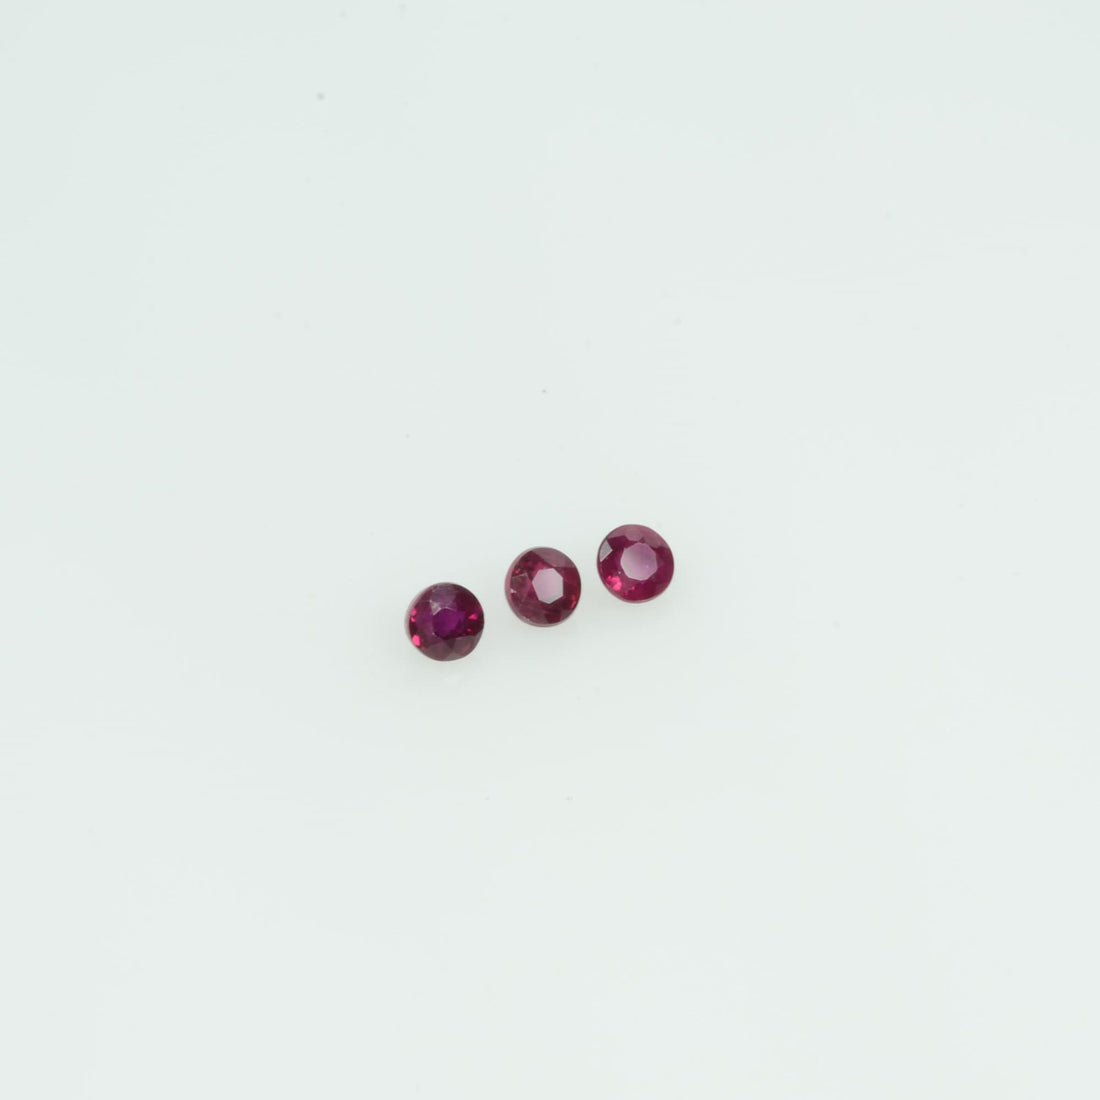 1.2-2.5 mm Natural Ruby Loose Gemstone Round Cut